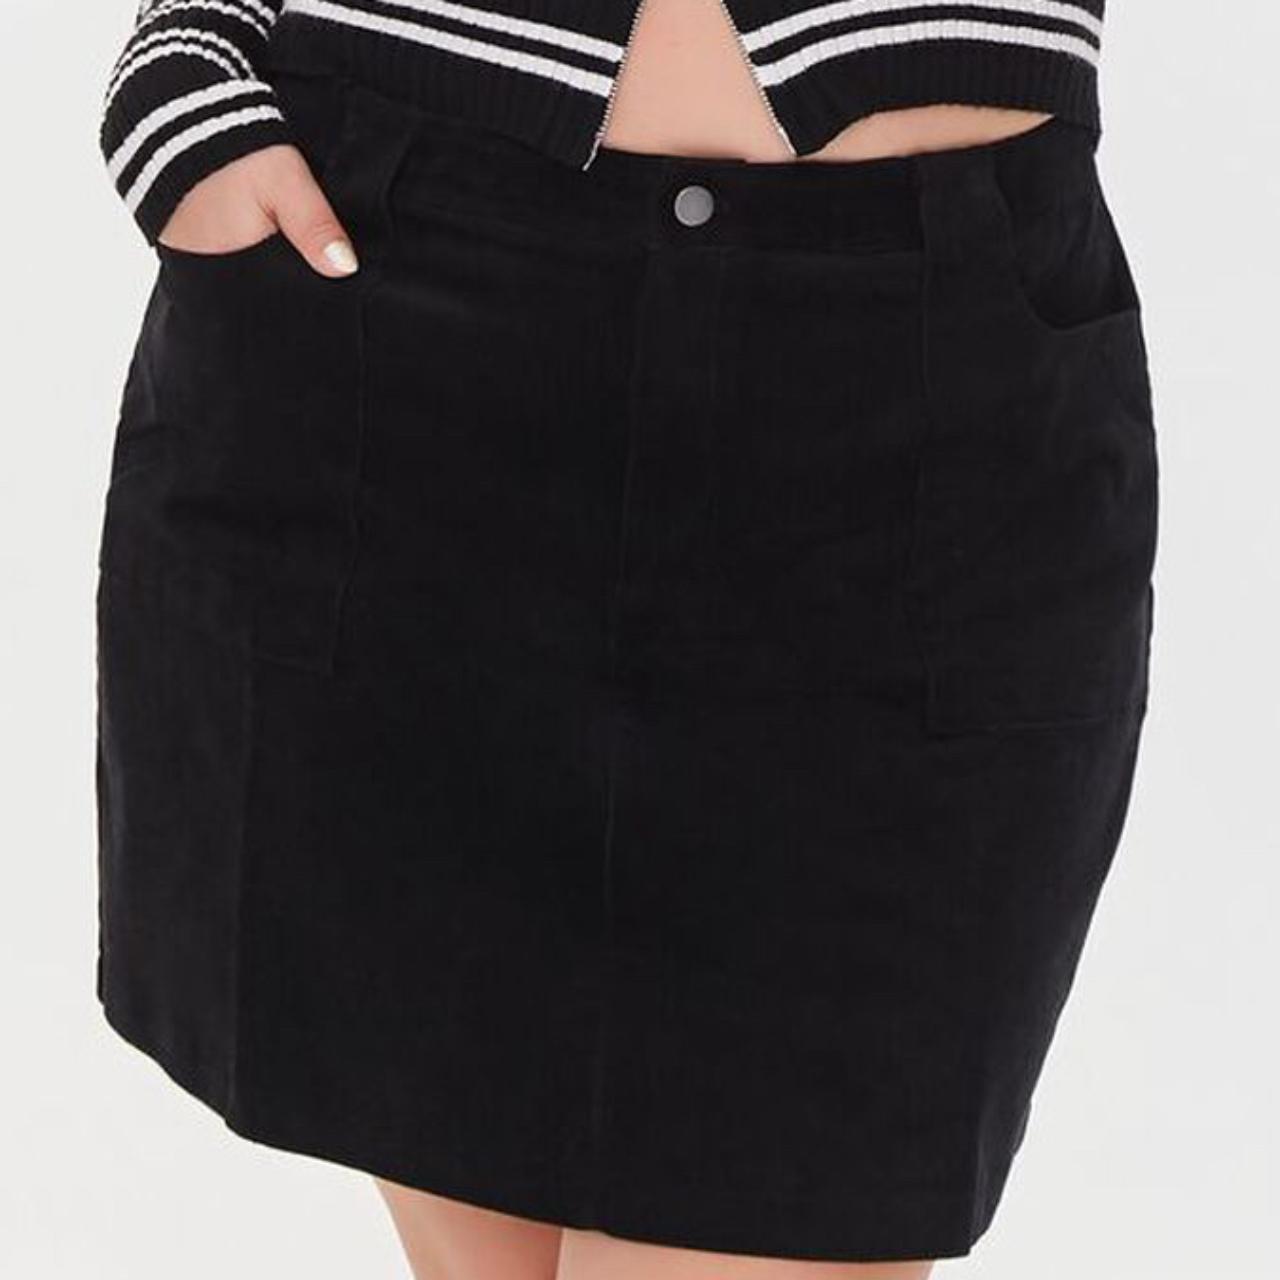 Forever 21 plus size corduroy black skirt. stretchy... - Depop